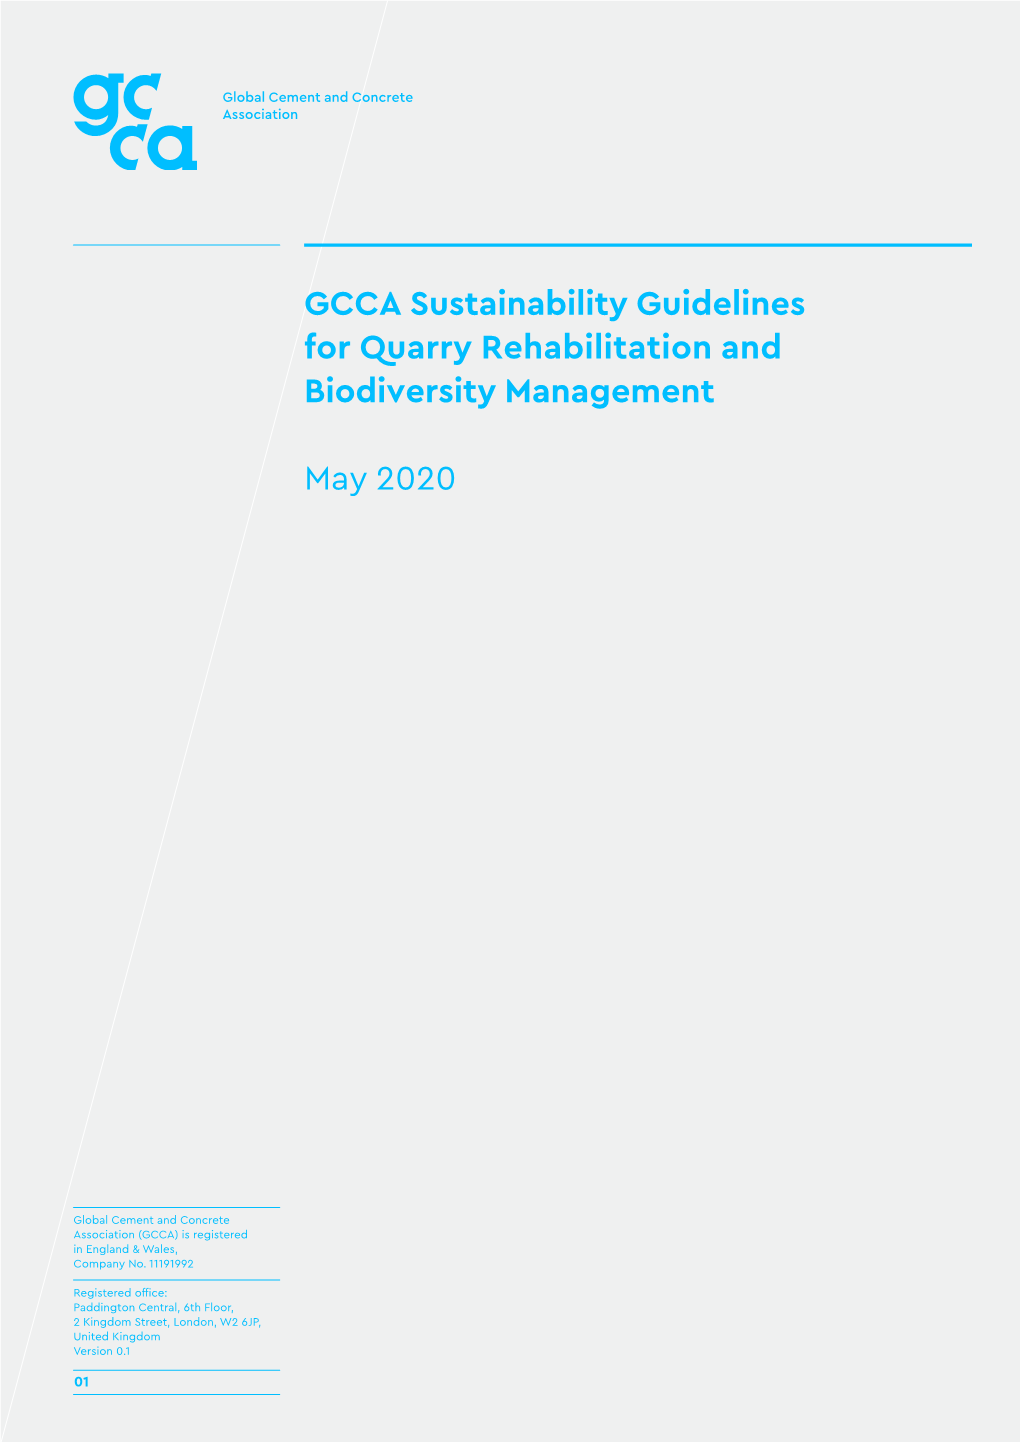 GCCA Sustainability Guidelines for Quarry Rehabilitation and Biodiversity Management